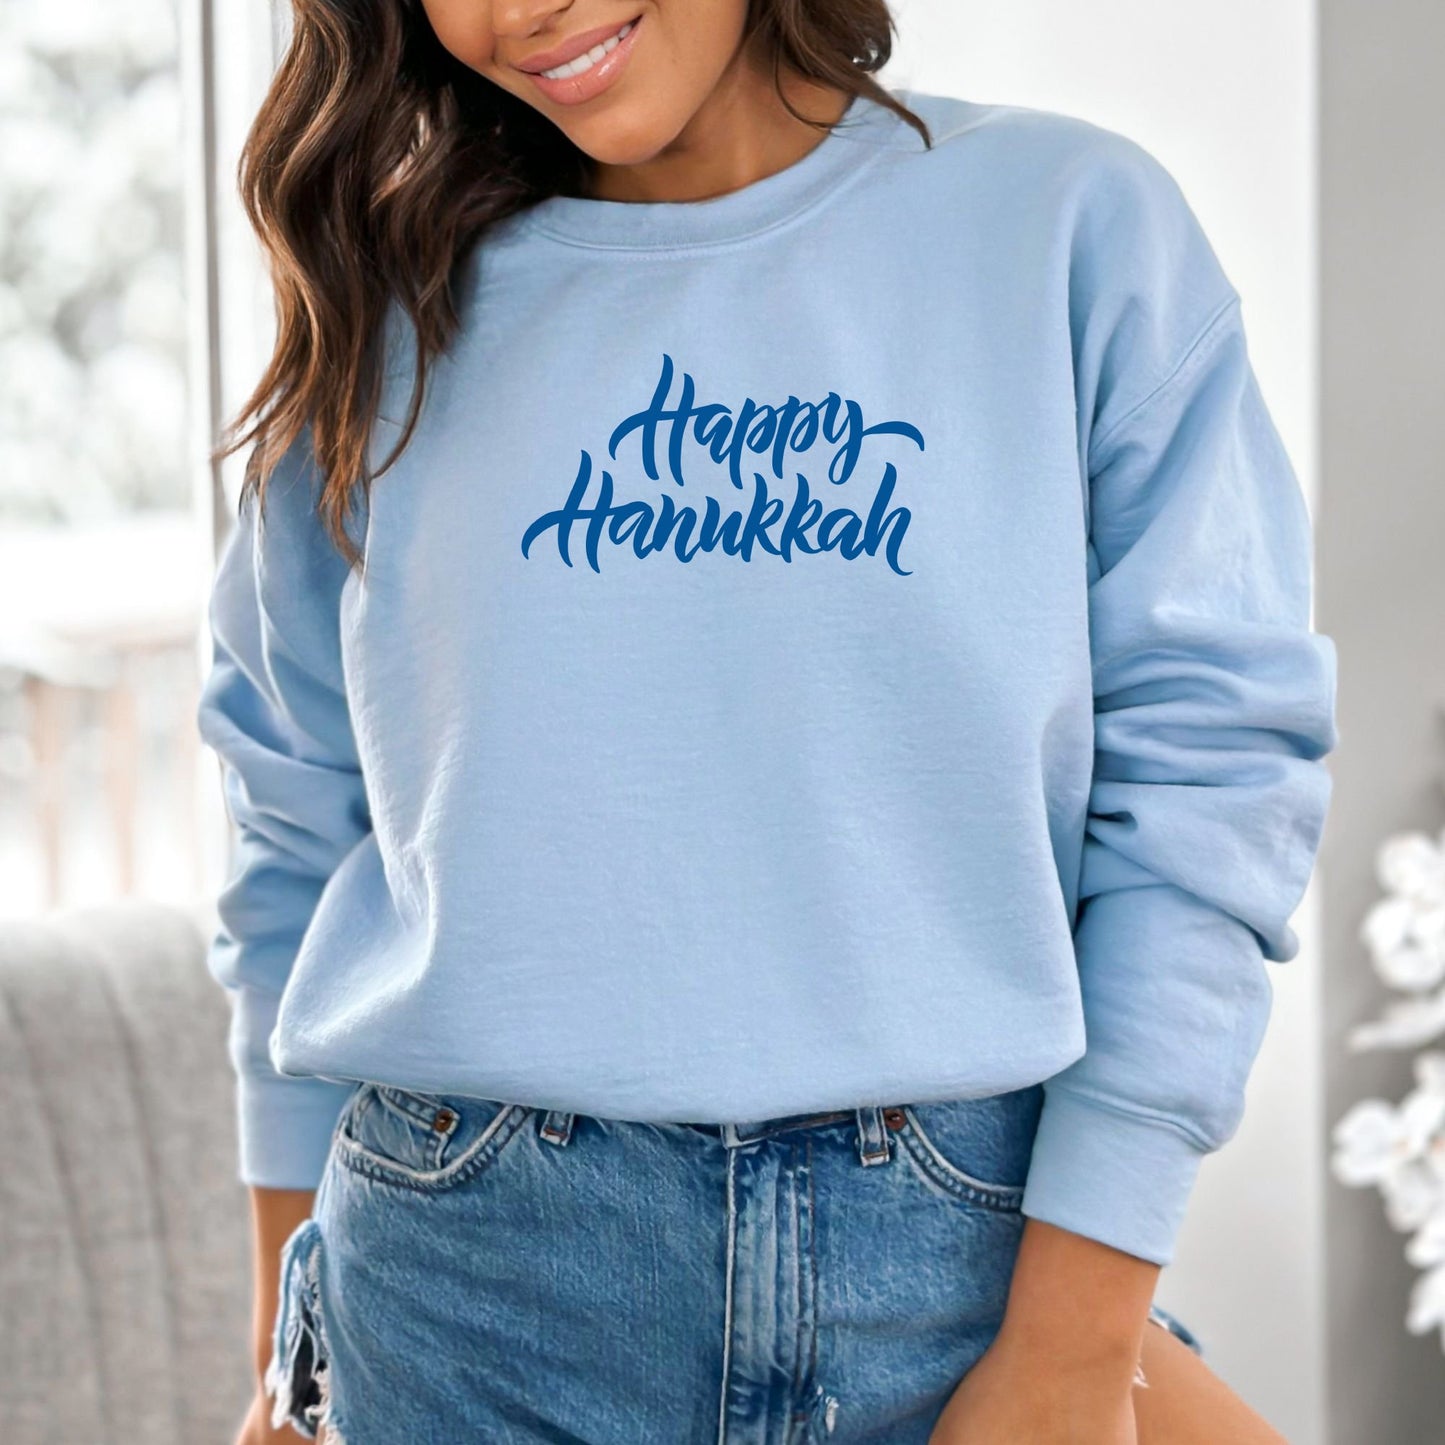 Hanukkah Sweatshirt, Happy Hanukkah - Mardonyx Sweatshirt S / Light Blue